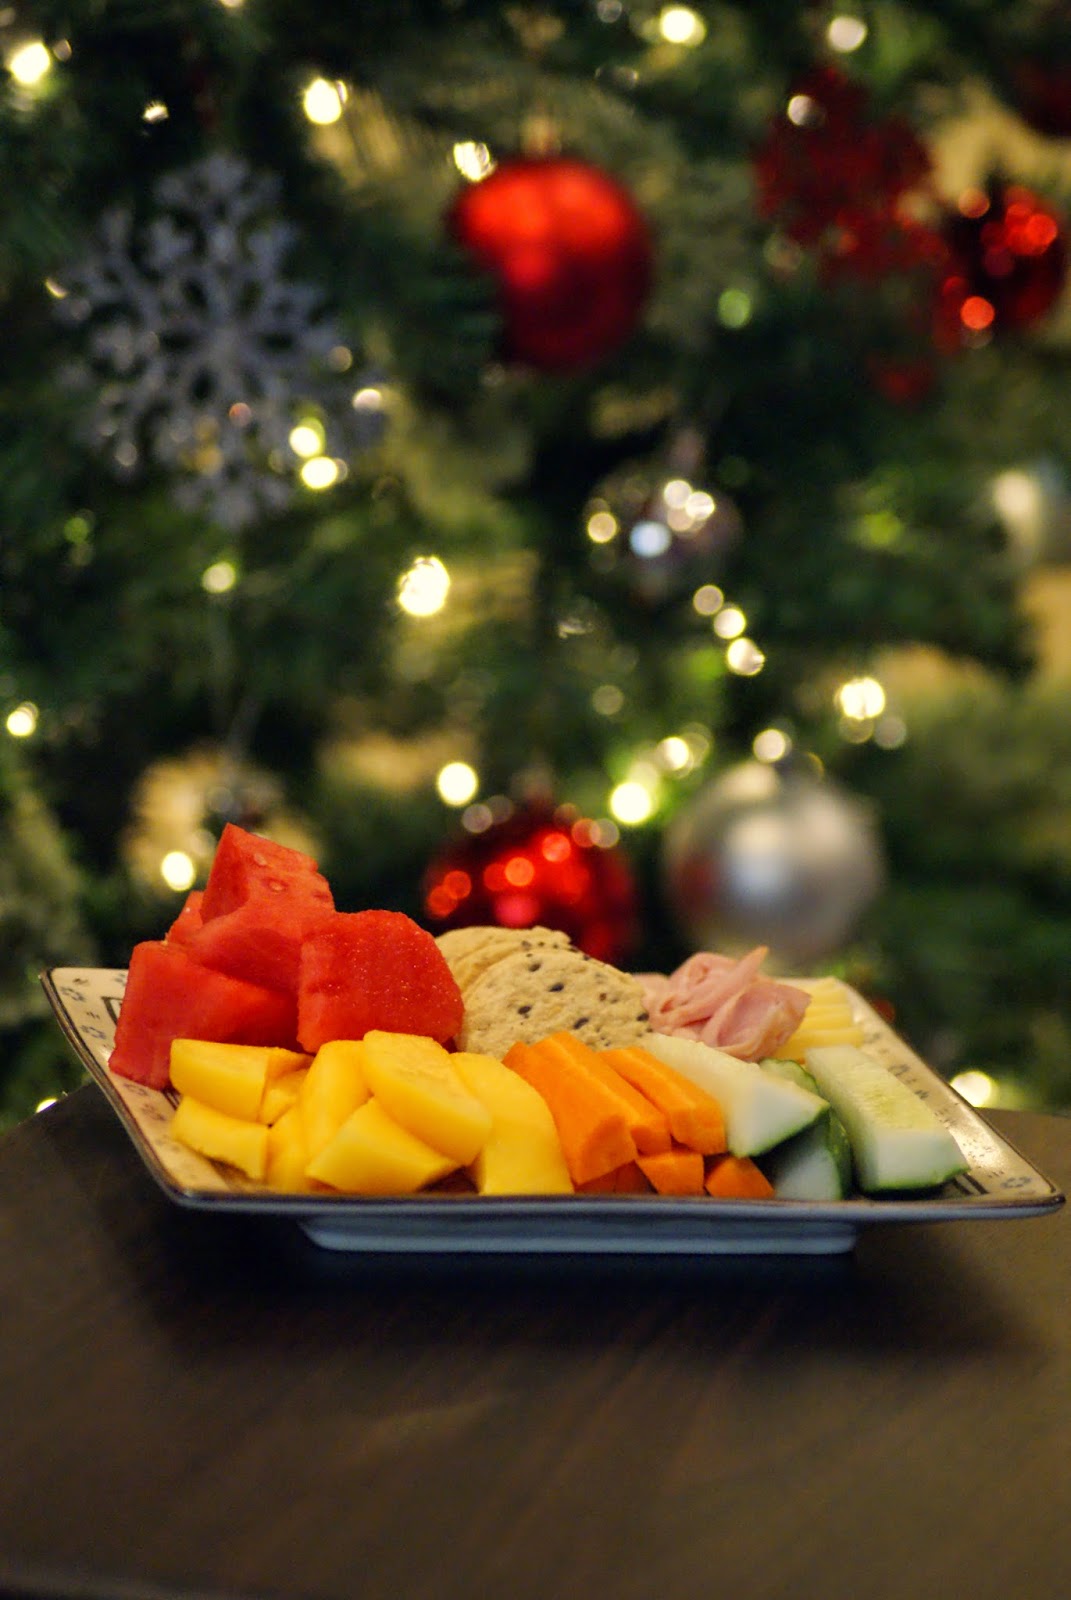 Snacky Picnic Dinner by the Christmas Tree - Christmas Advent Calendar Activities